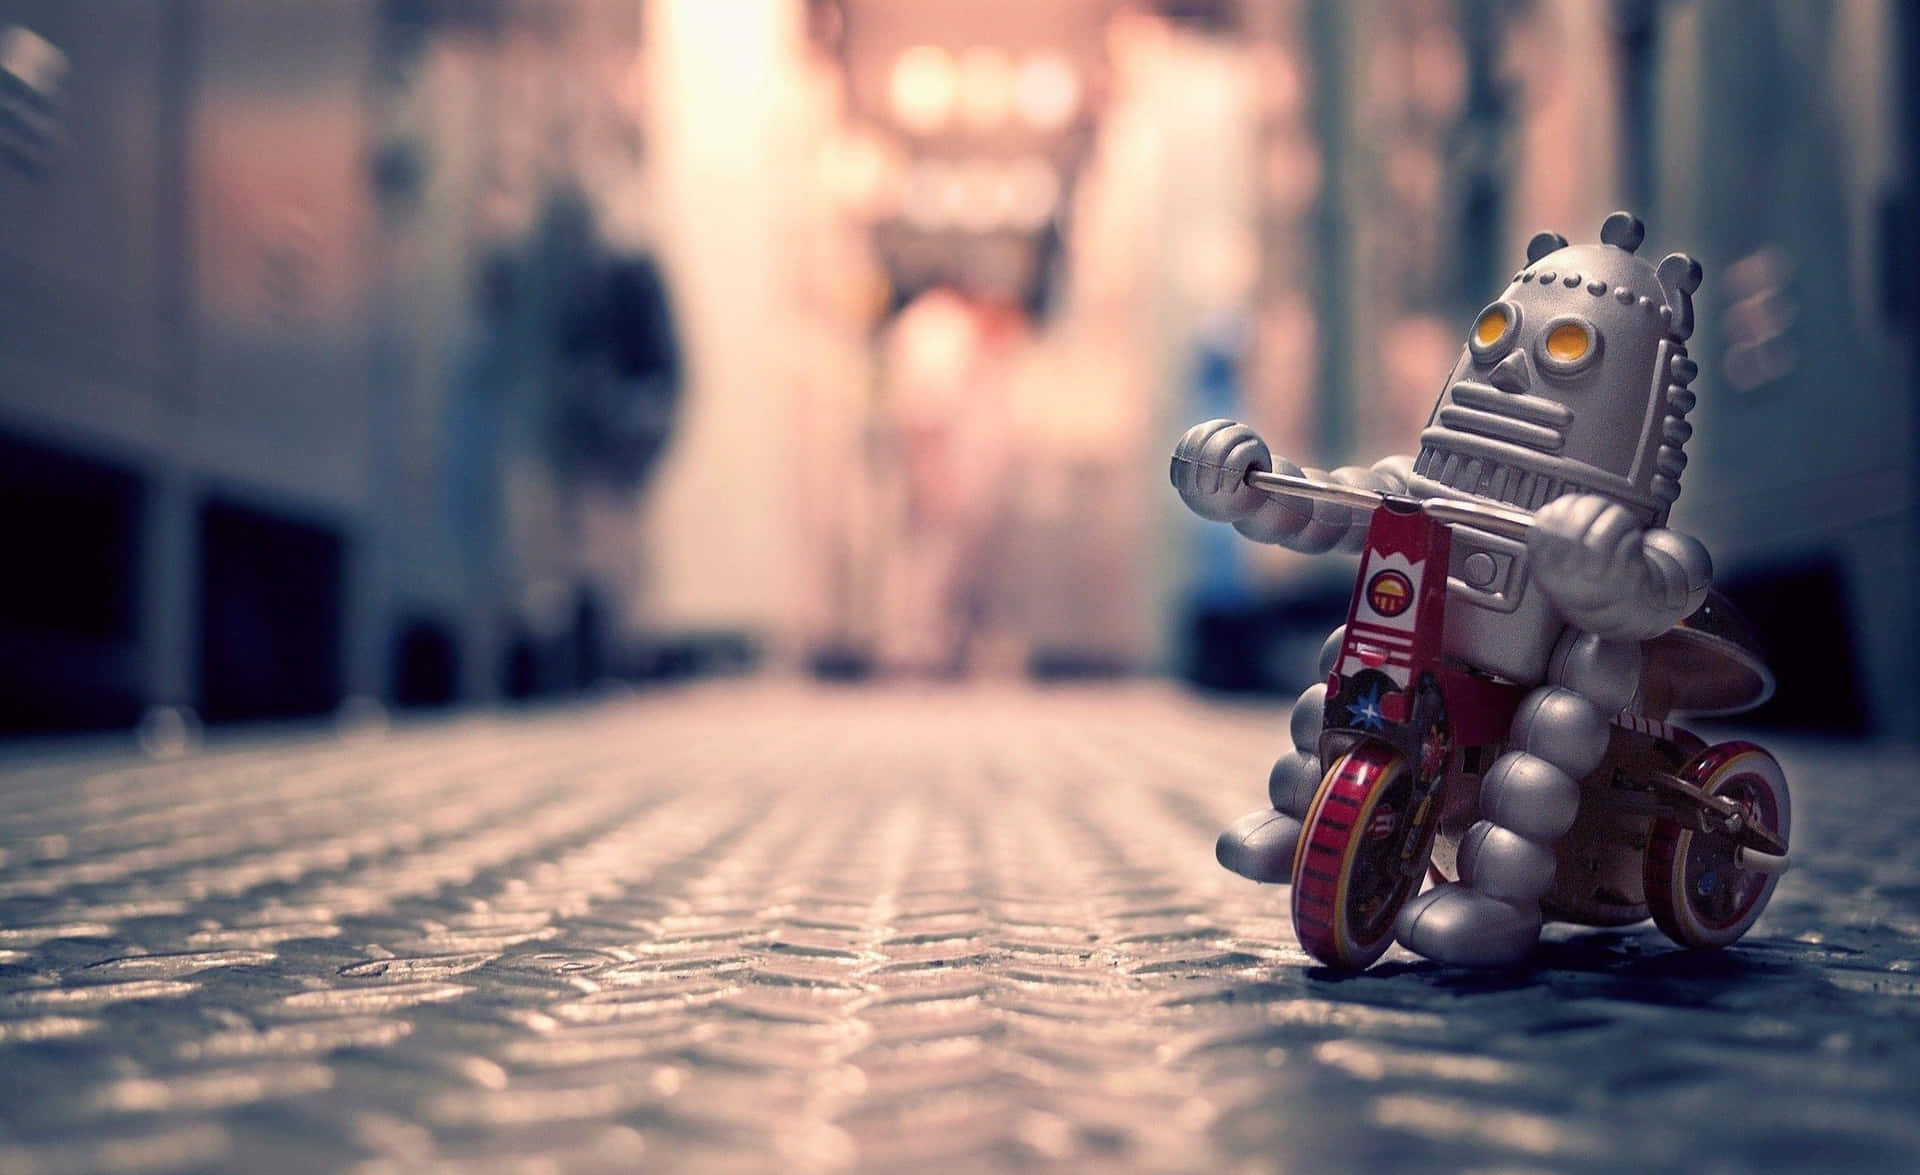 Toy Roboton Tricycle Urban Adventure.jpg Wallpaper